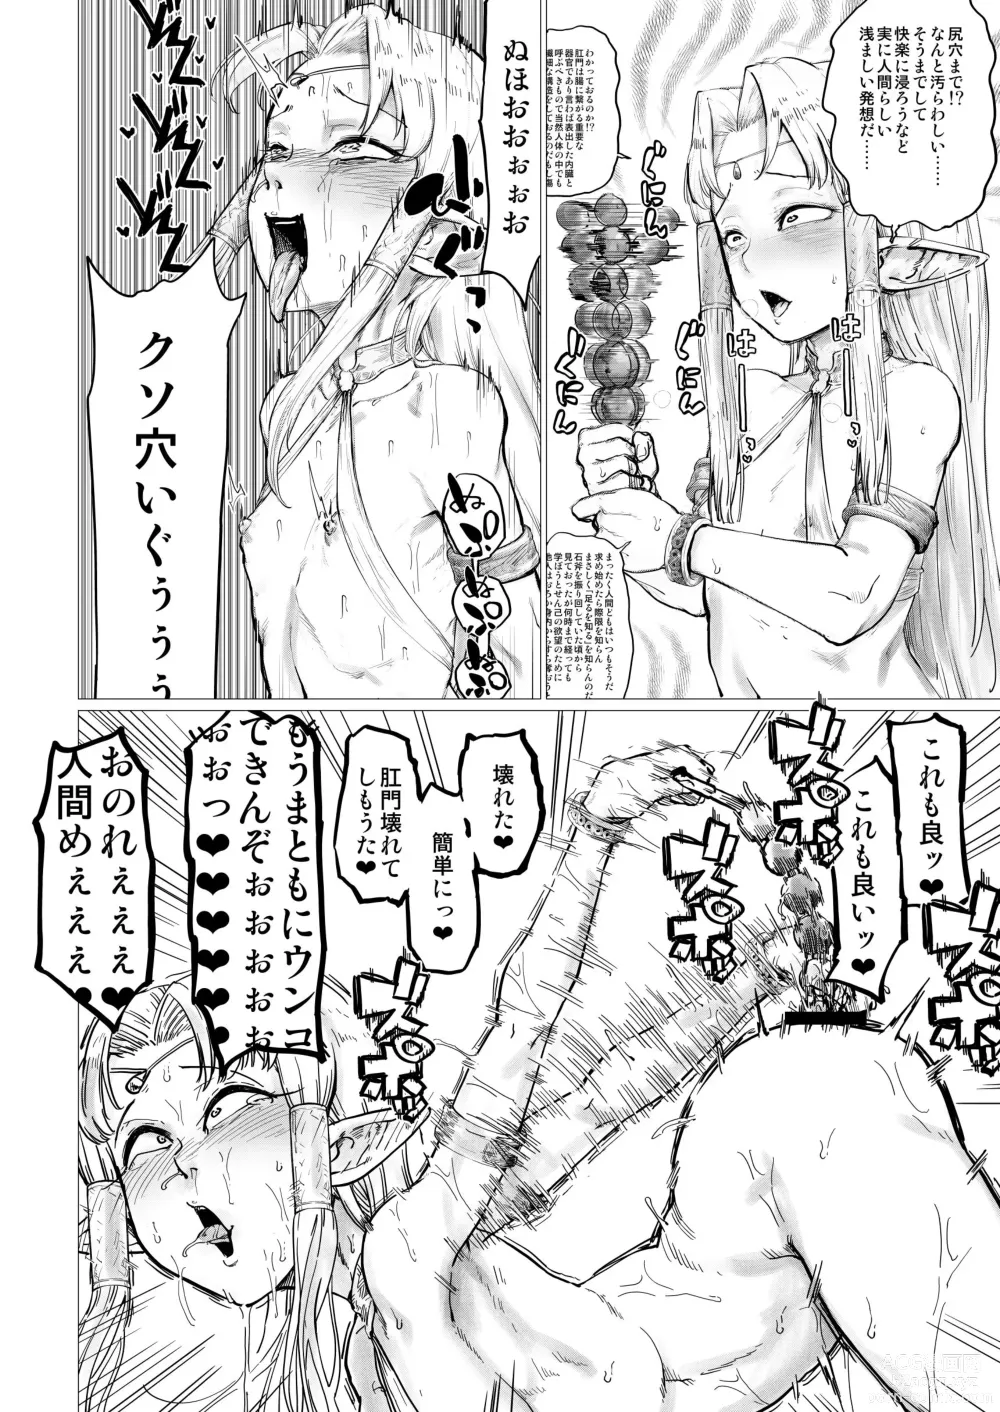 Page 19 of doujinshi Shikorufu